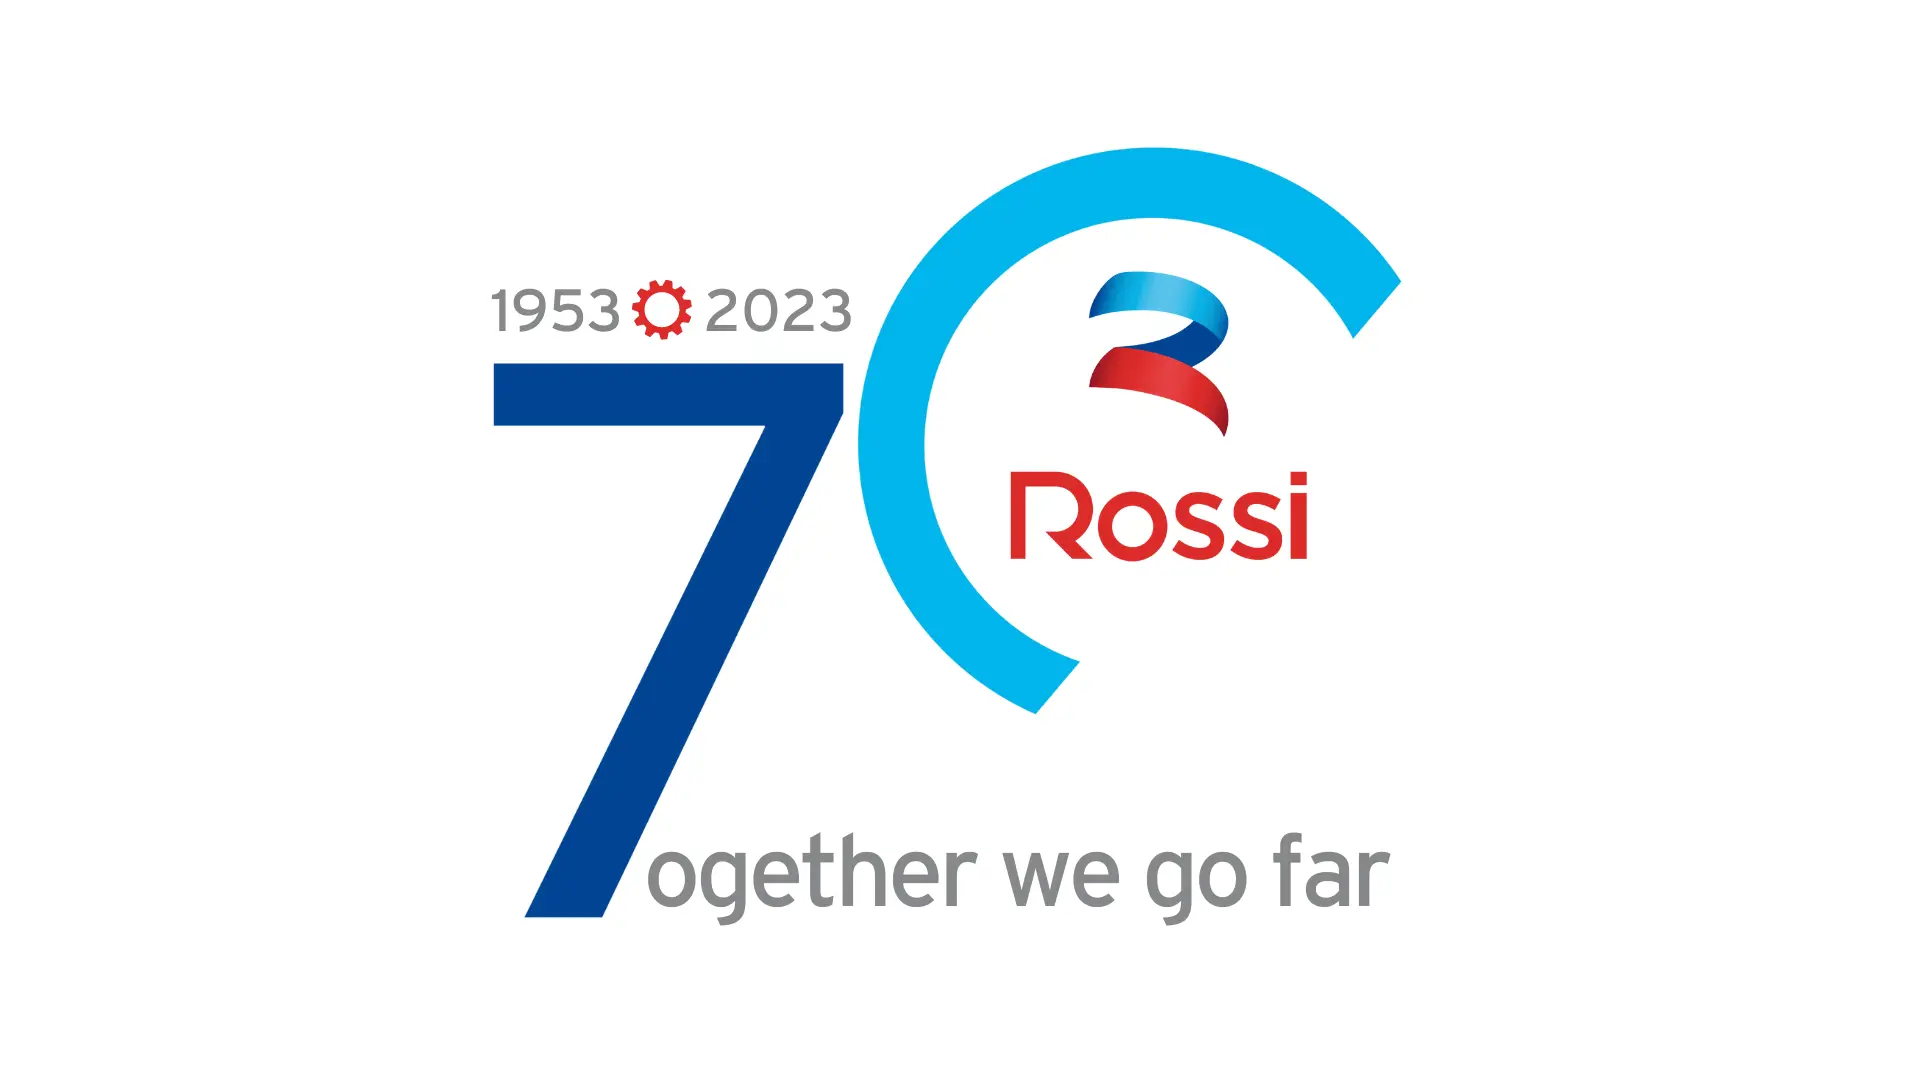 70th-anniversary logo